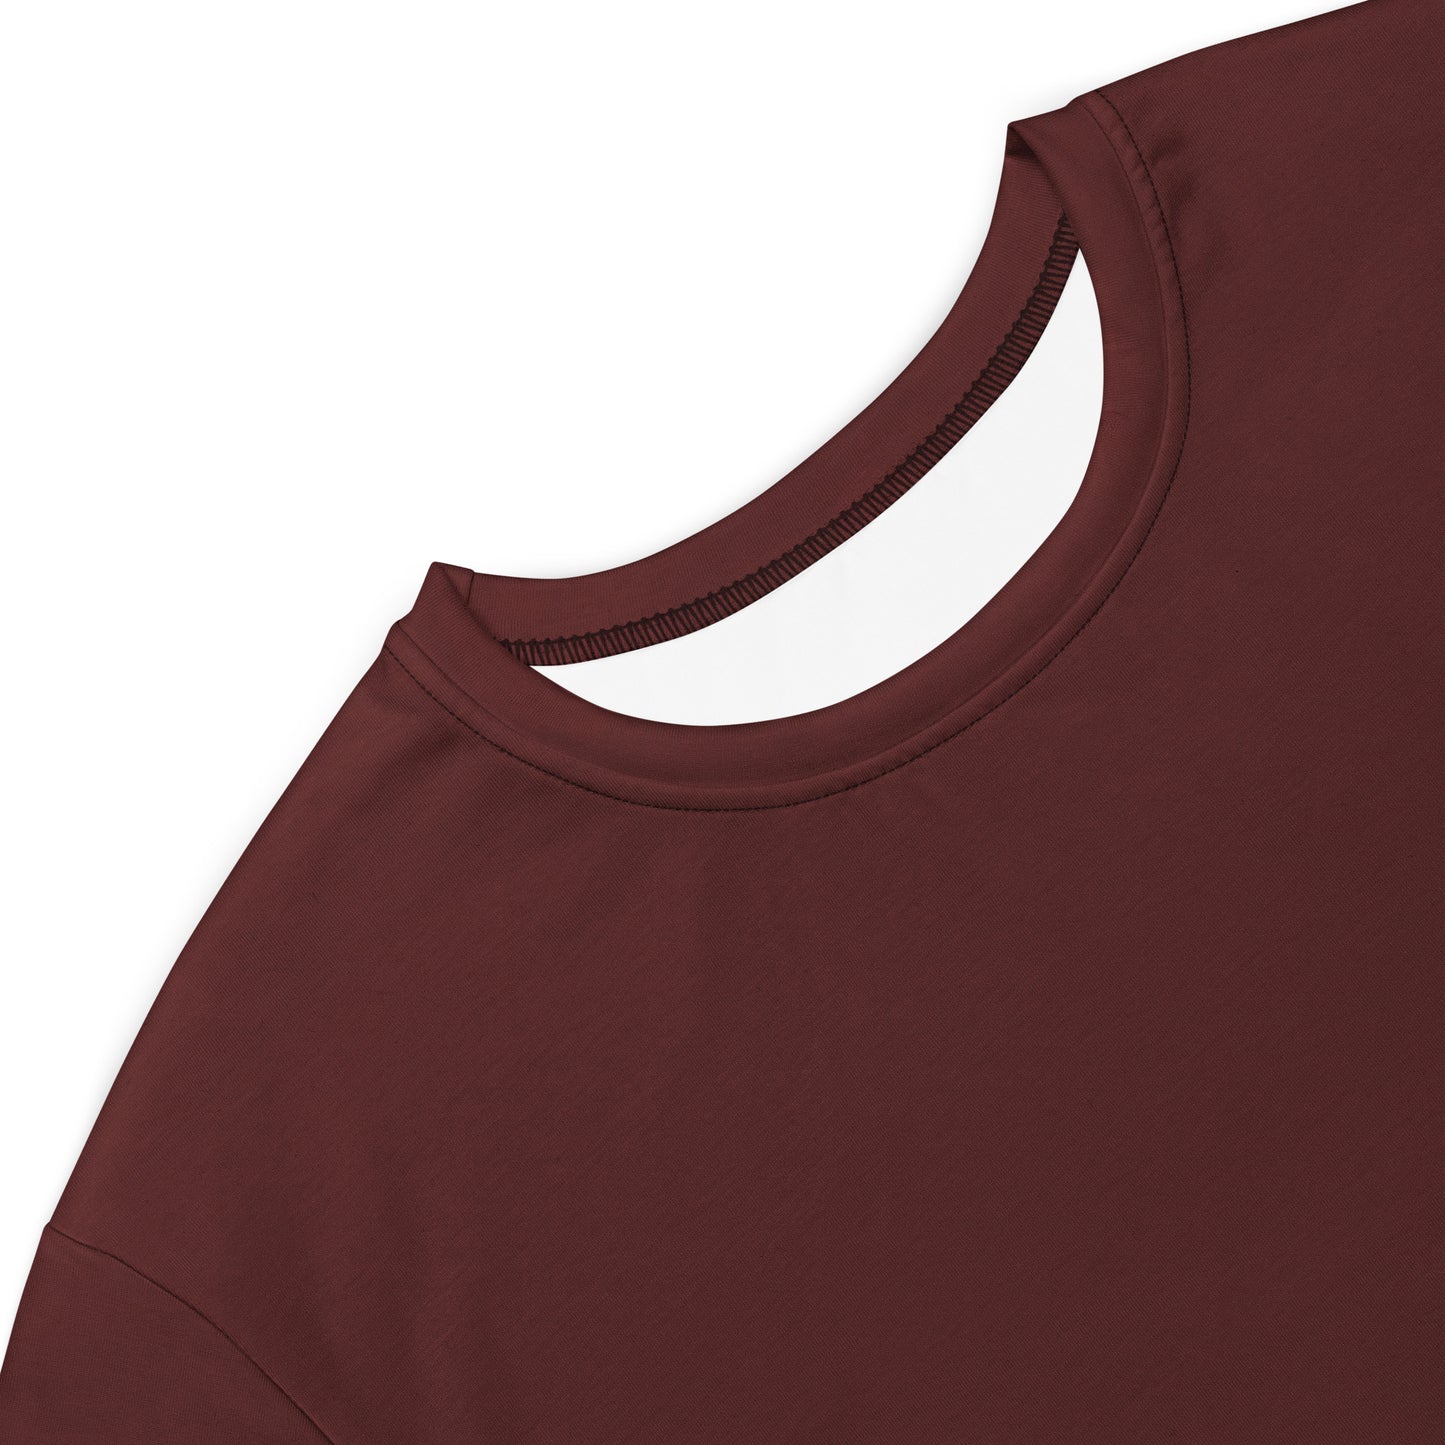 Auburn T-shirt Dress